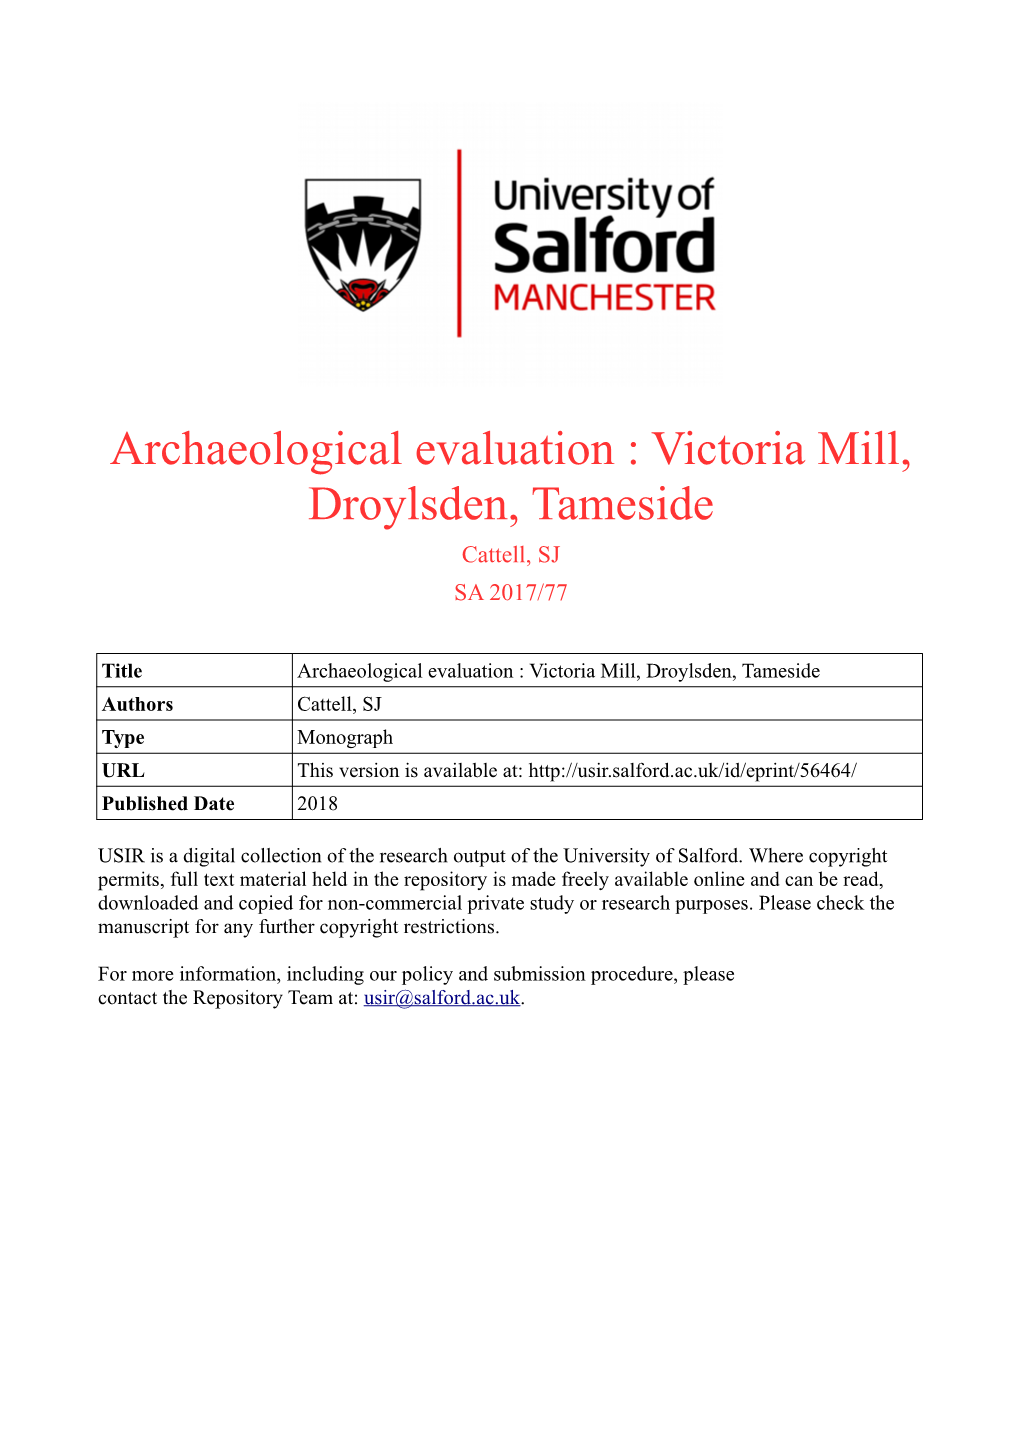 Victoria Mill, Droylsden Archaeological Evaluation